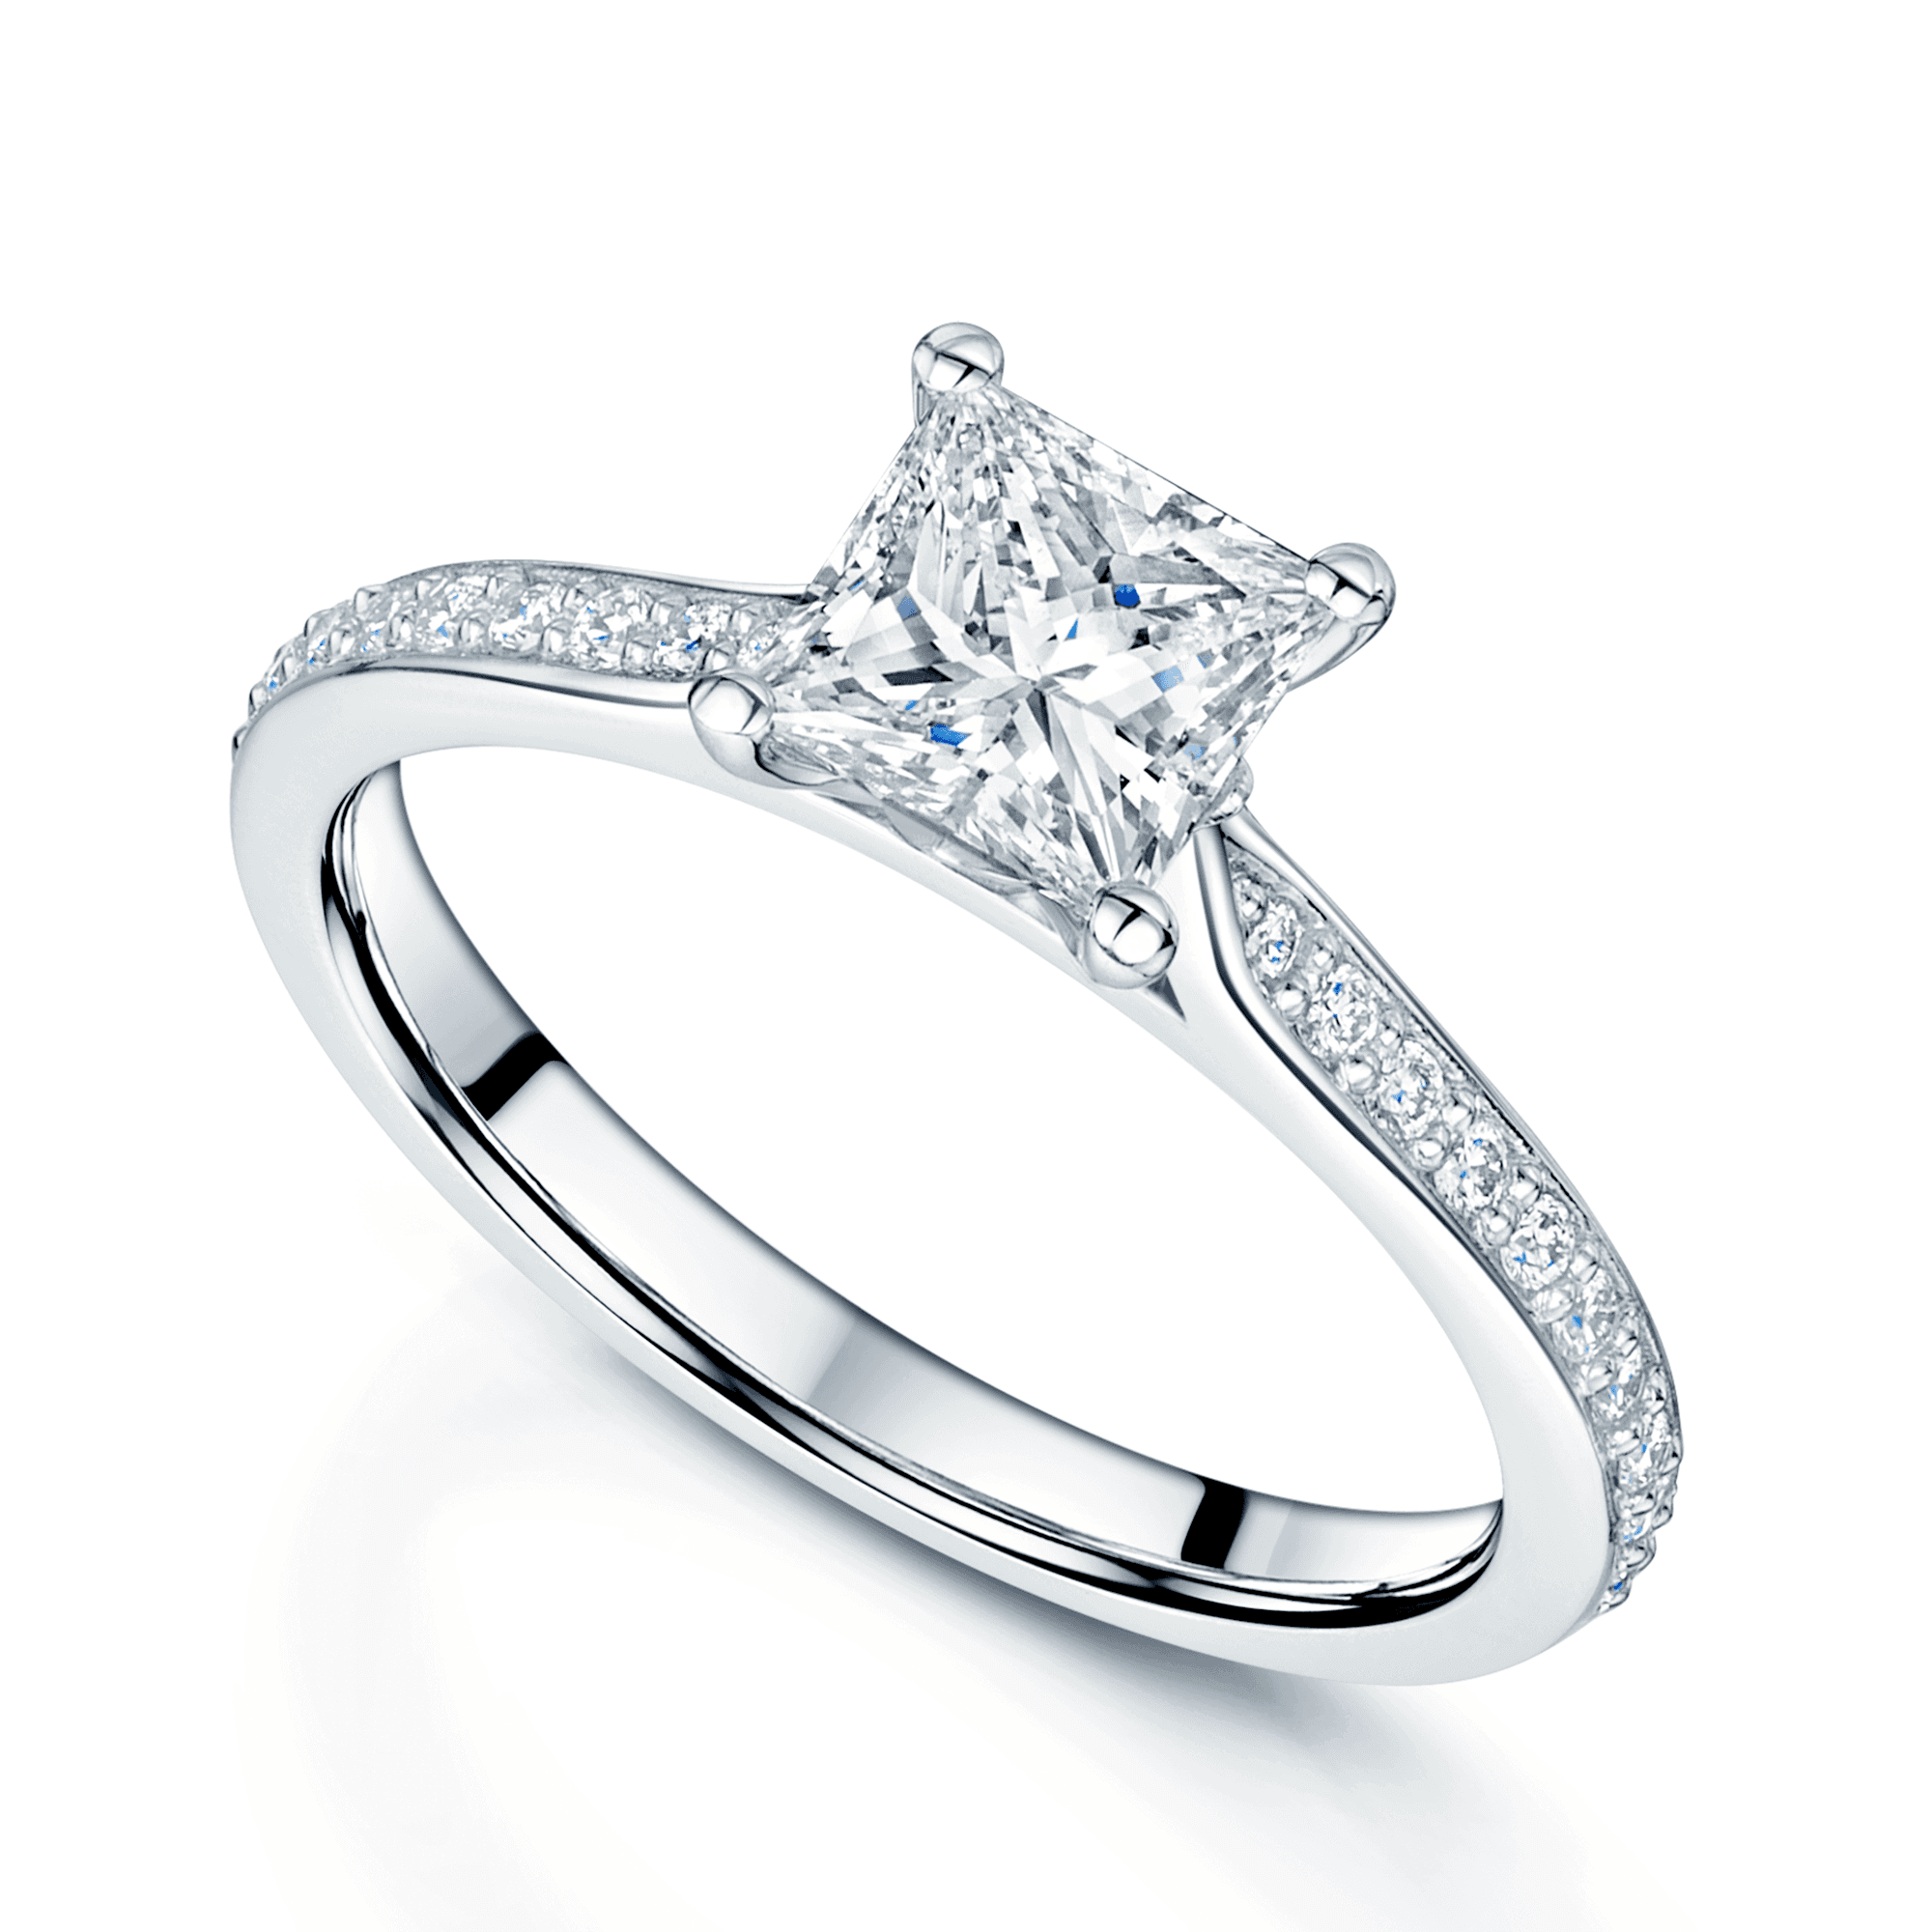 Platinum GIA Certificated Princess Cut Single Stone Diamond Ring With Diamond Set Shoulders